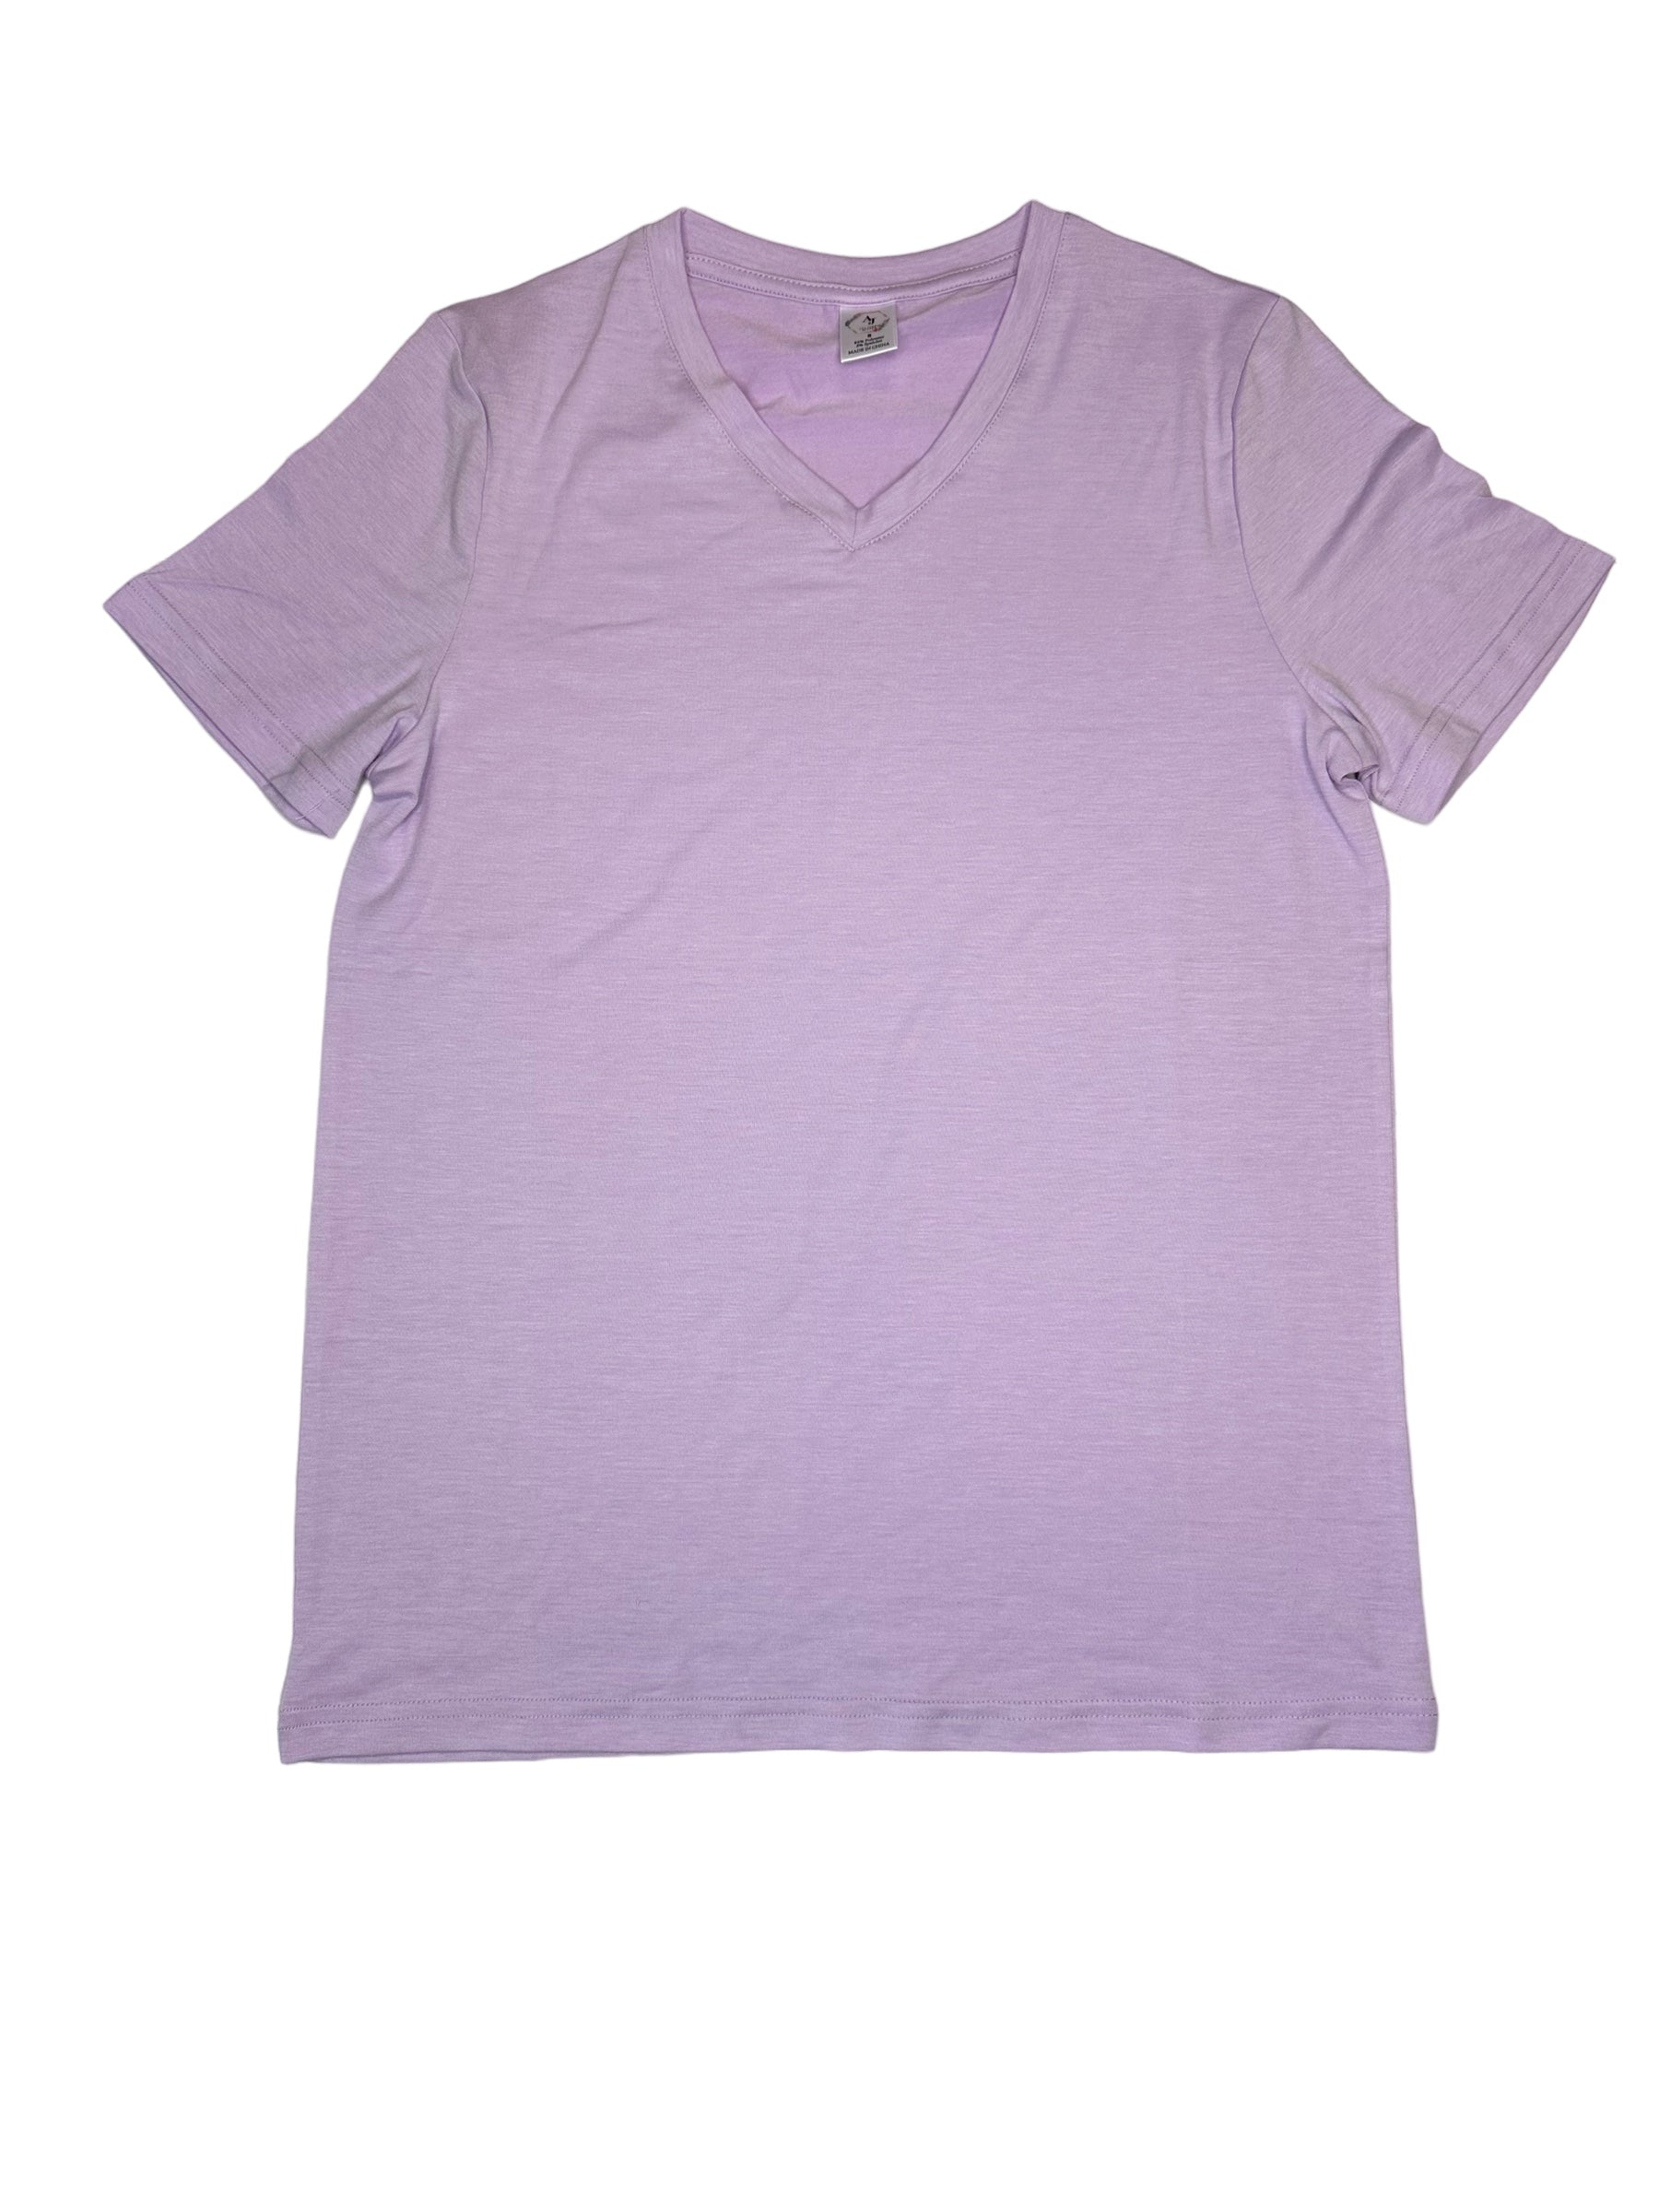 adviicd T-Shirts for Sublimation Tee Tshirt Women's Short Sleeve V-Neck  Graphic T-Shirt Female Tshirt 